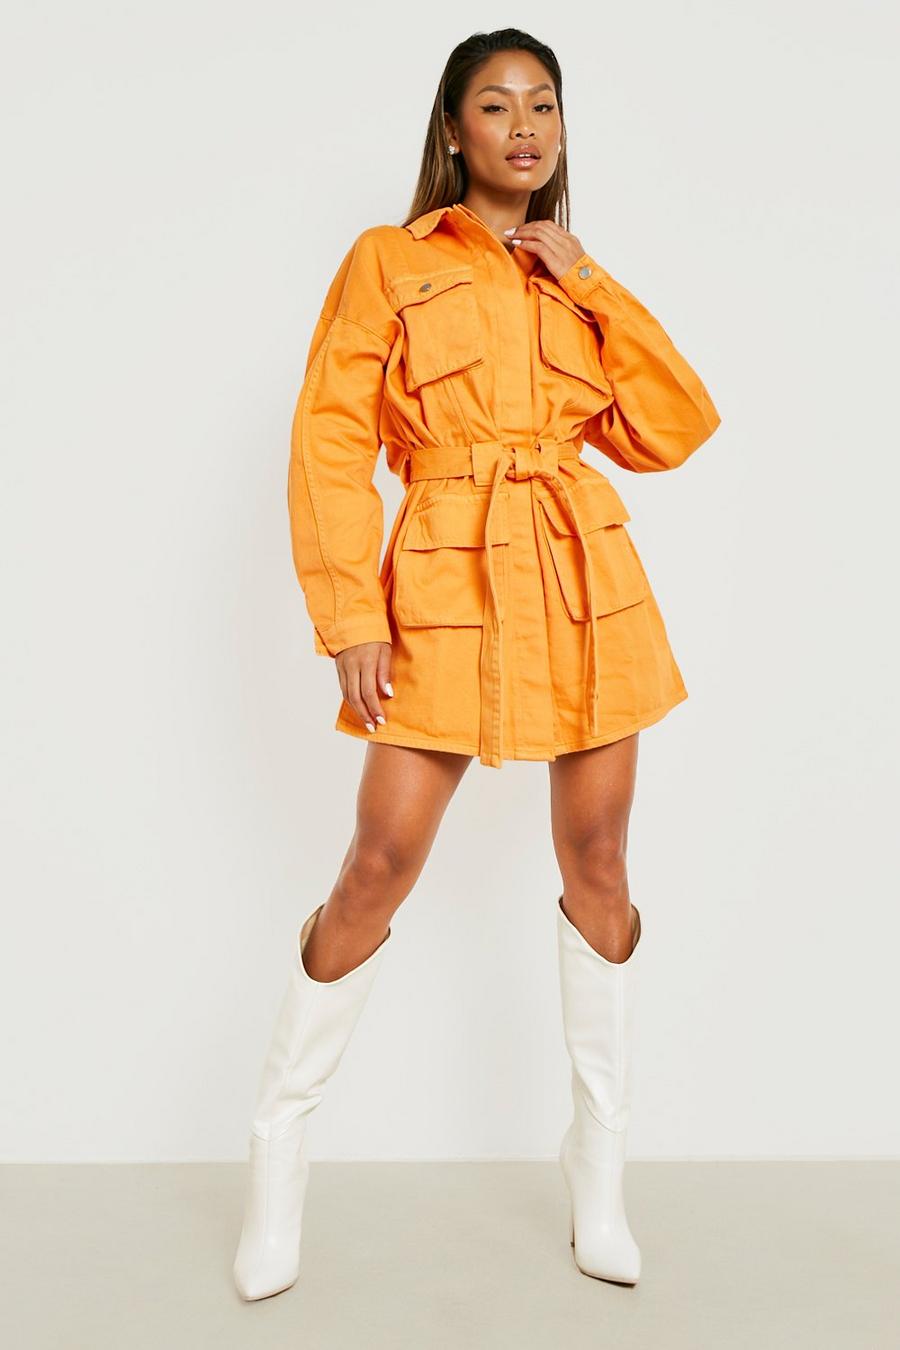 Vestido estilo camisa chaqueta con bolsillos utilitarios Premium (hasta talla 52), Orange image number 1